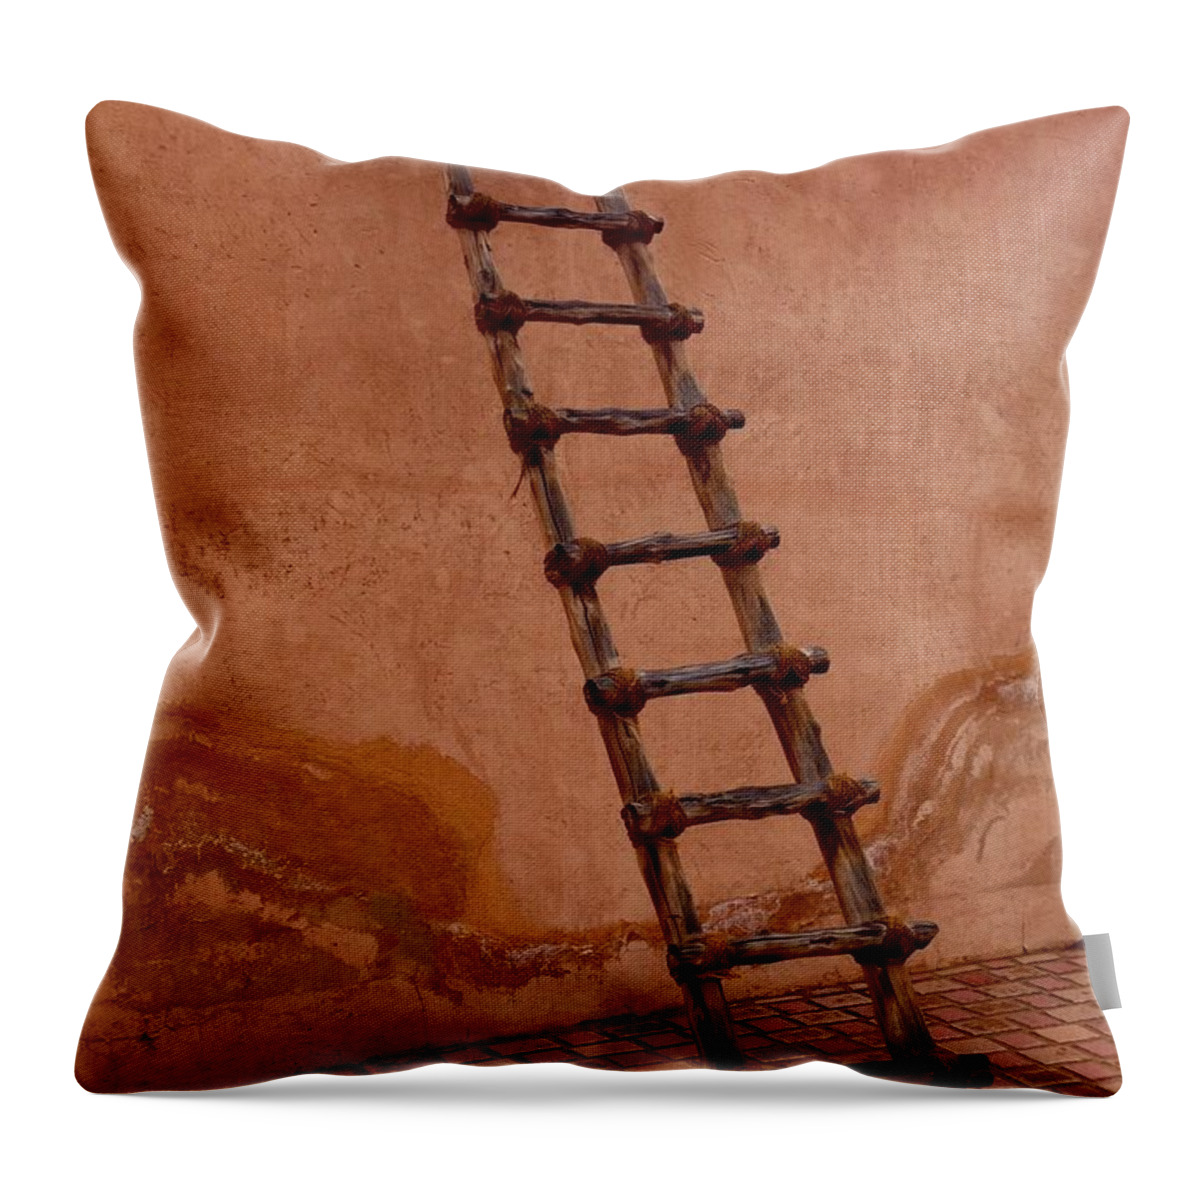 Ladder Throw Pillow featuring the photograph Al Ain Ladder by Barbara Von Pagel